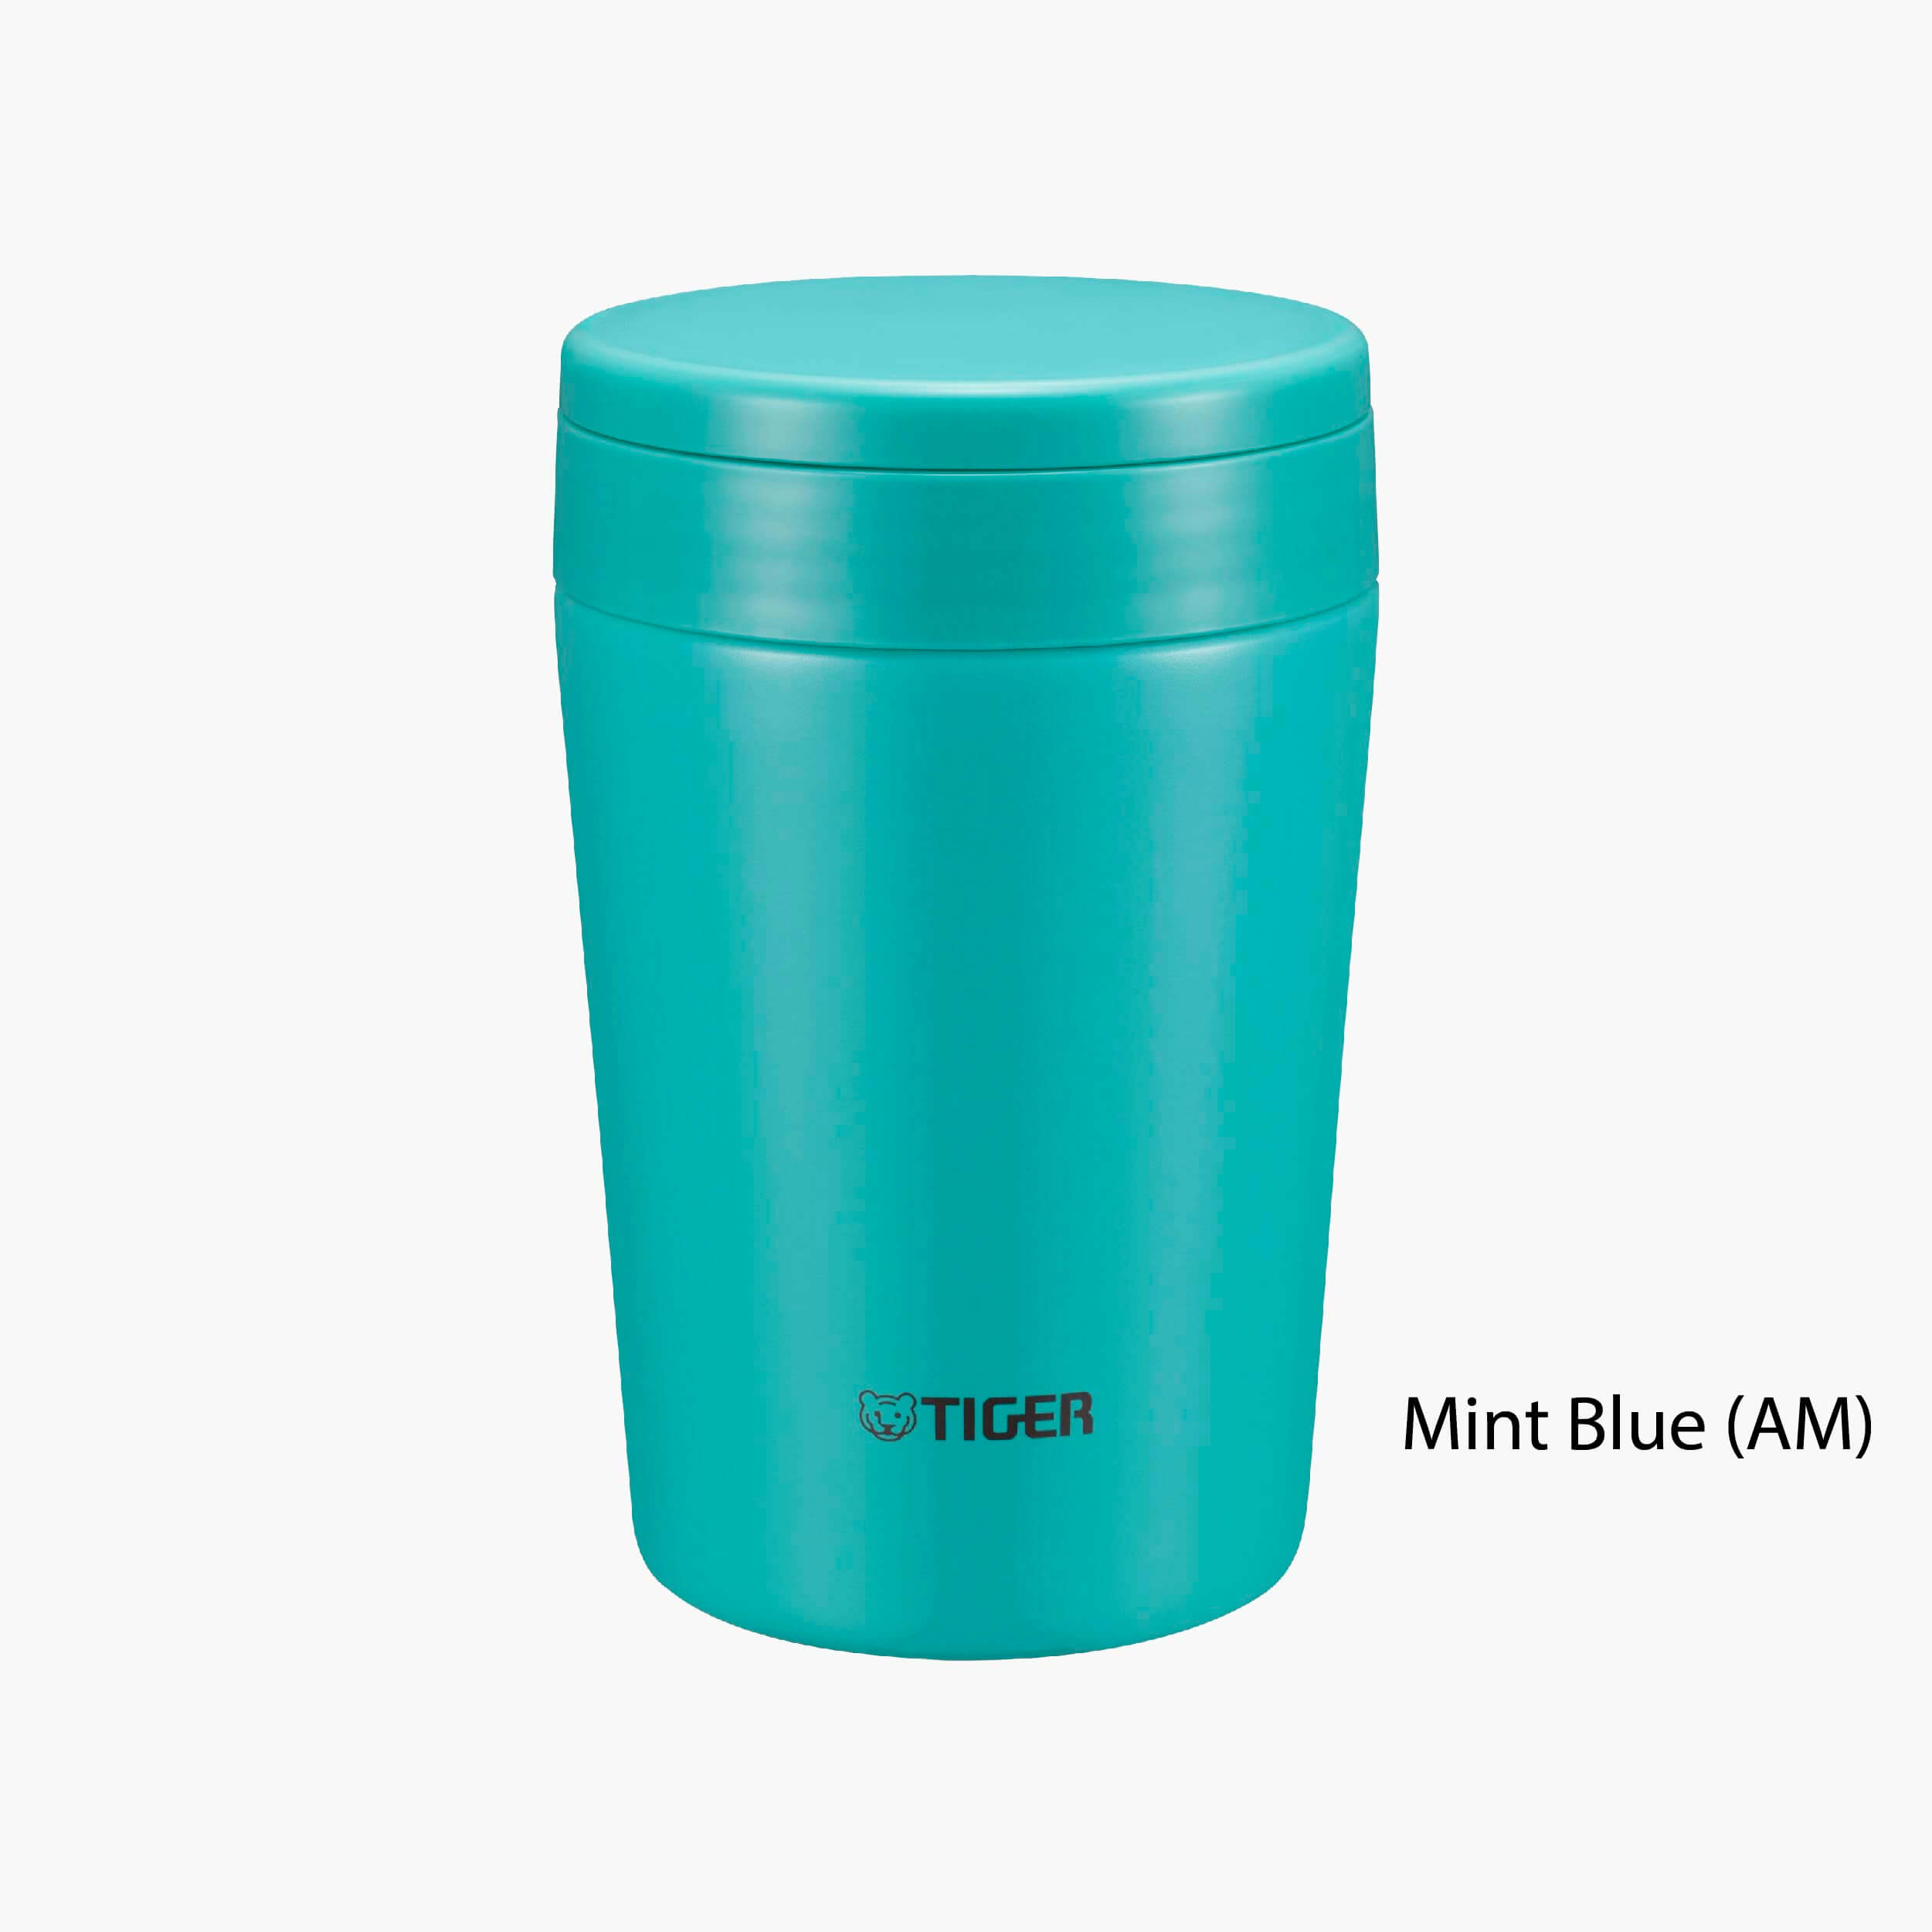 Mint Blue (AM)